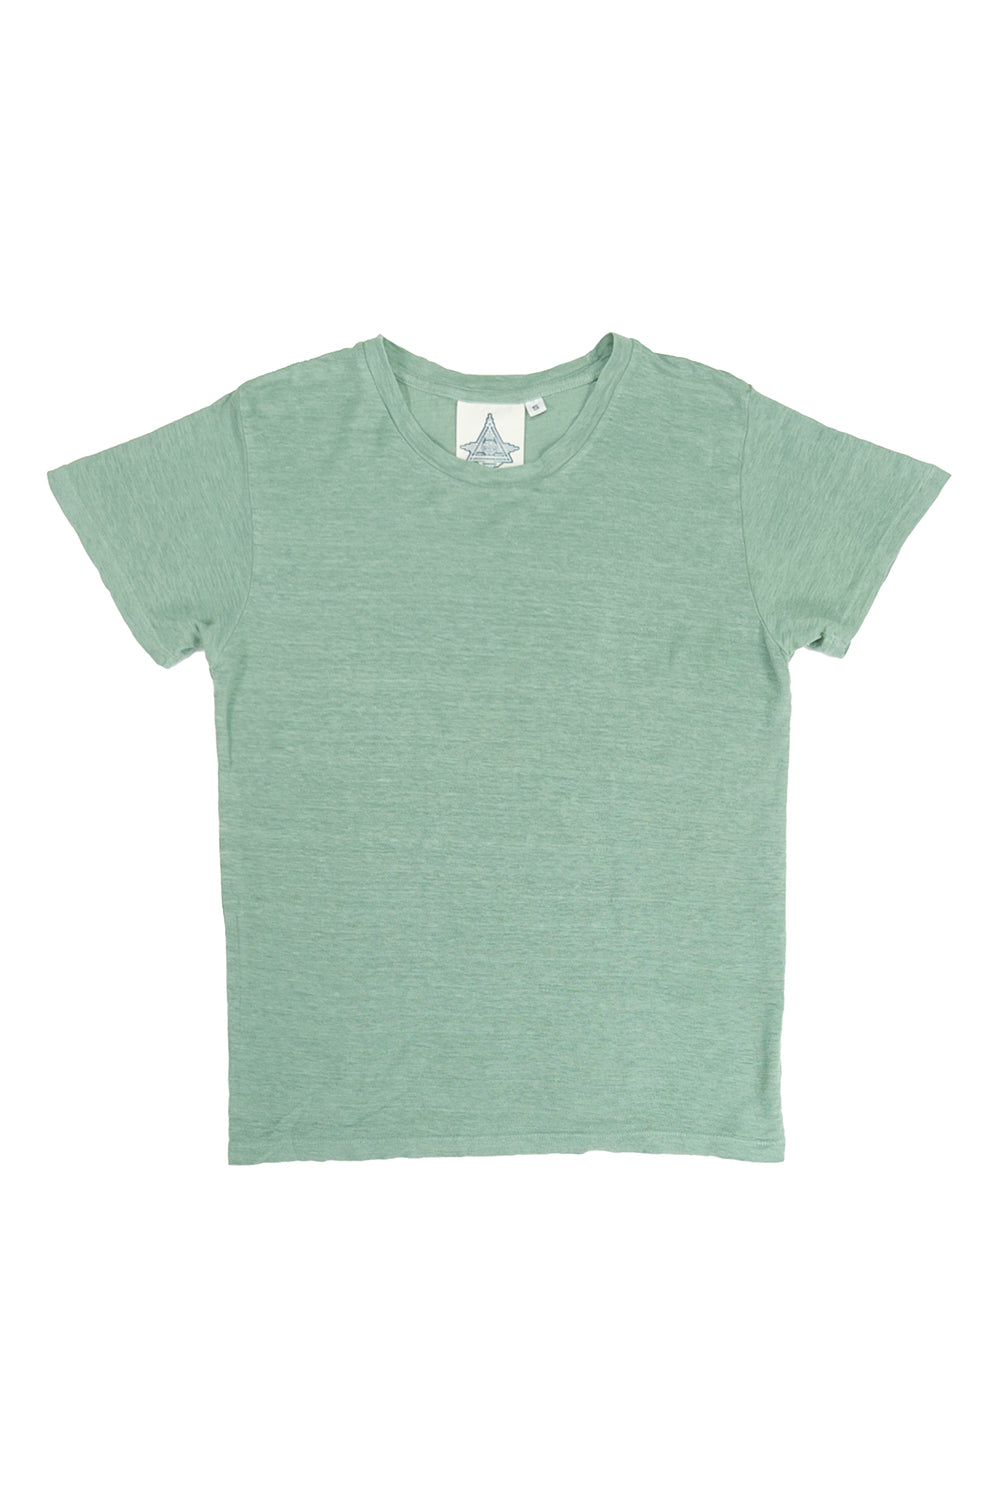 Madison 100% Hemp Tee | Jungmaven Hemp Clothing & Accessories / Color: Sage Green